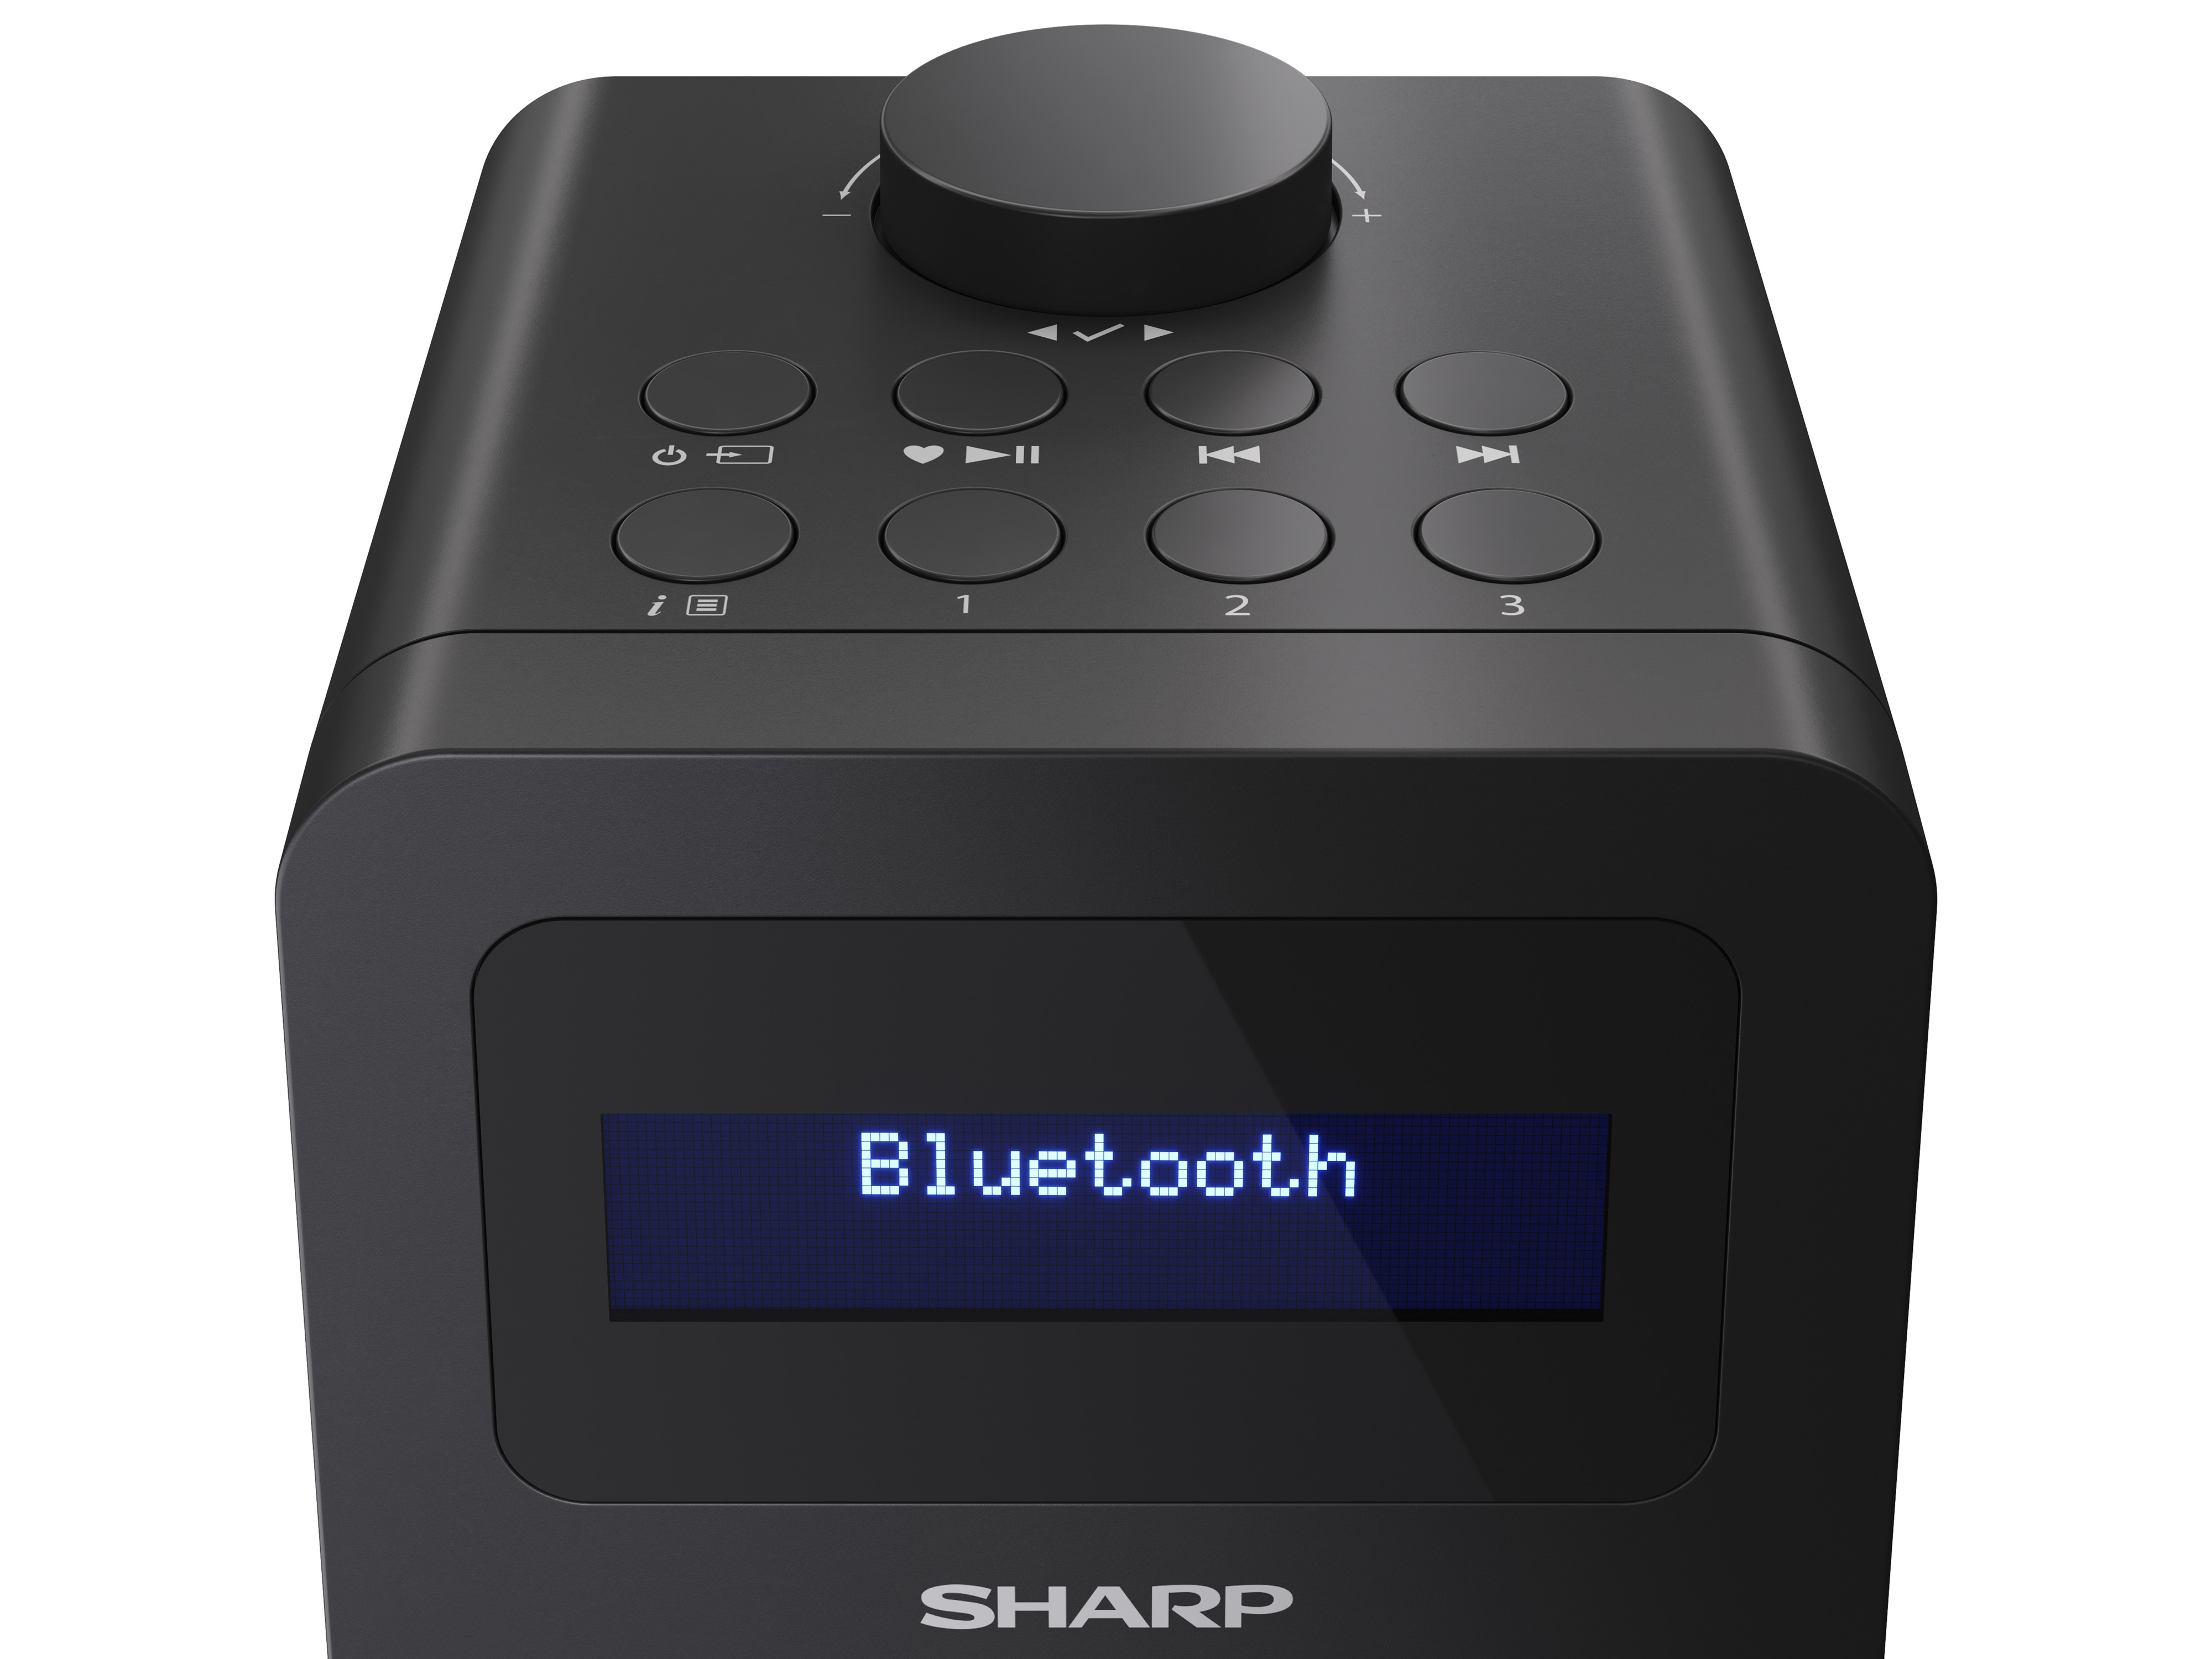 SHARP Digitalradio DR-430, schwarz, DBT+, Bluetooth